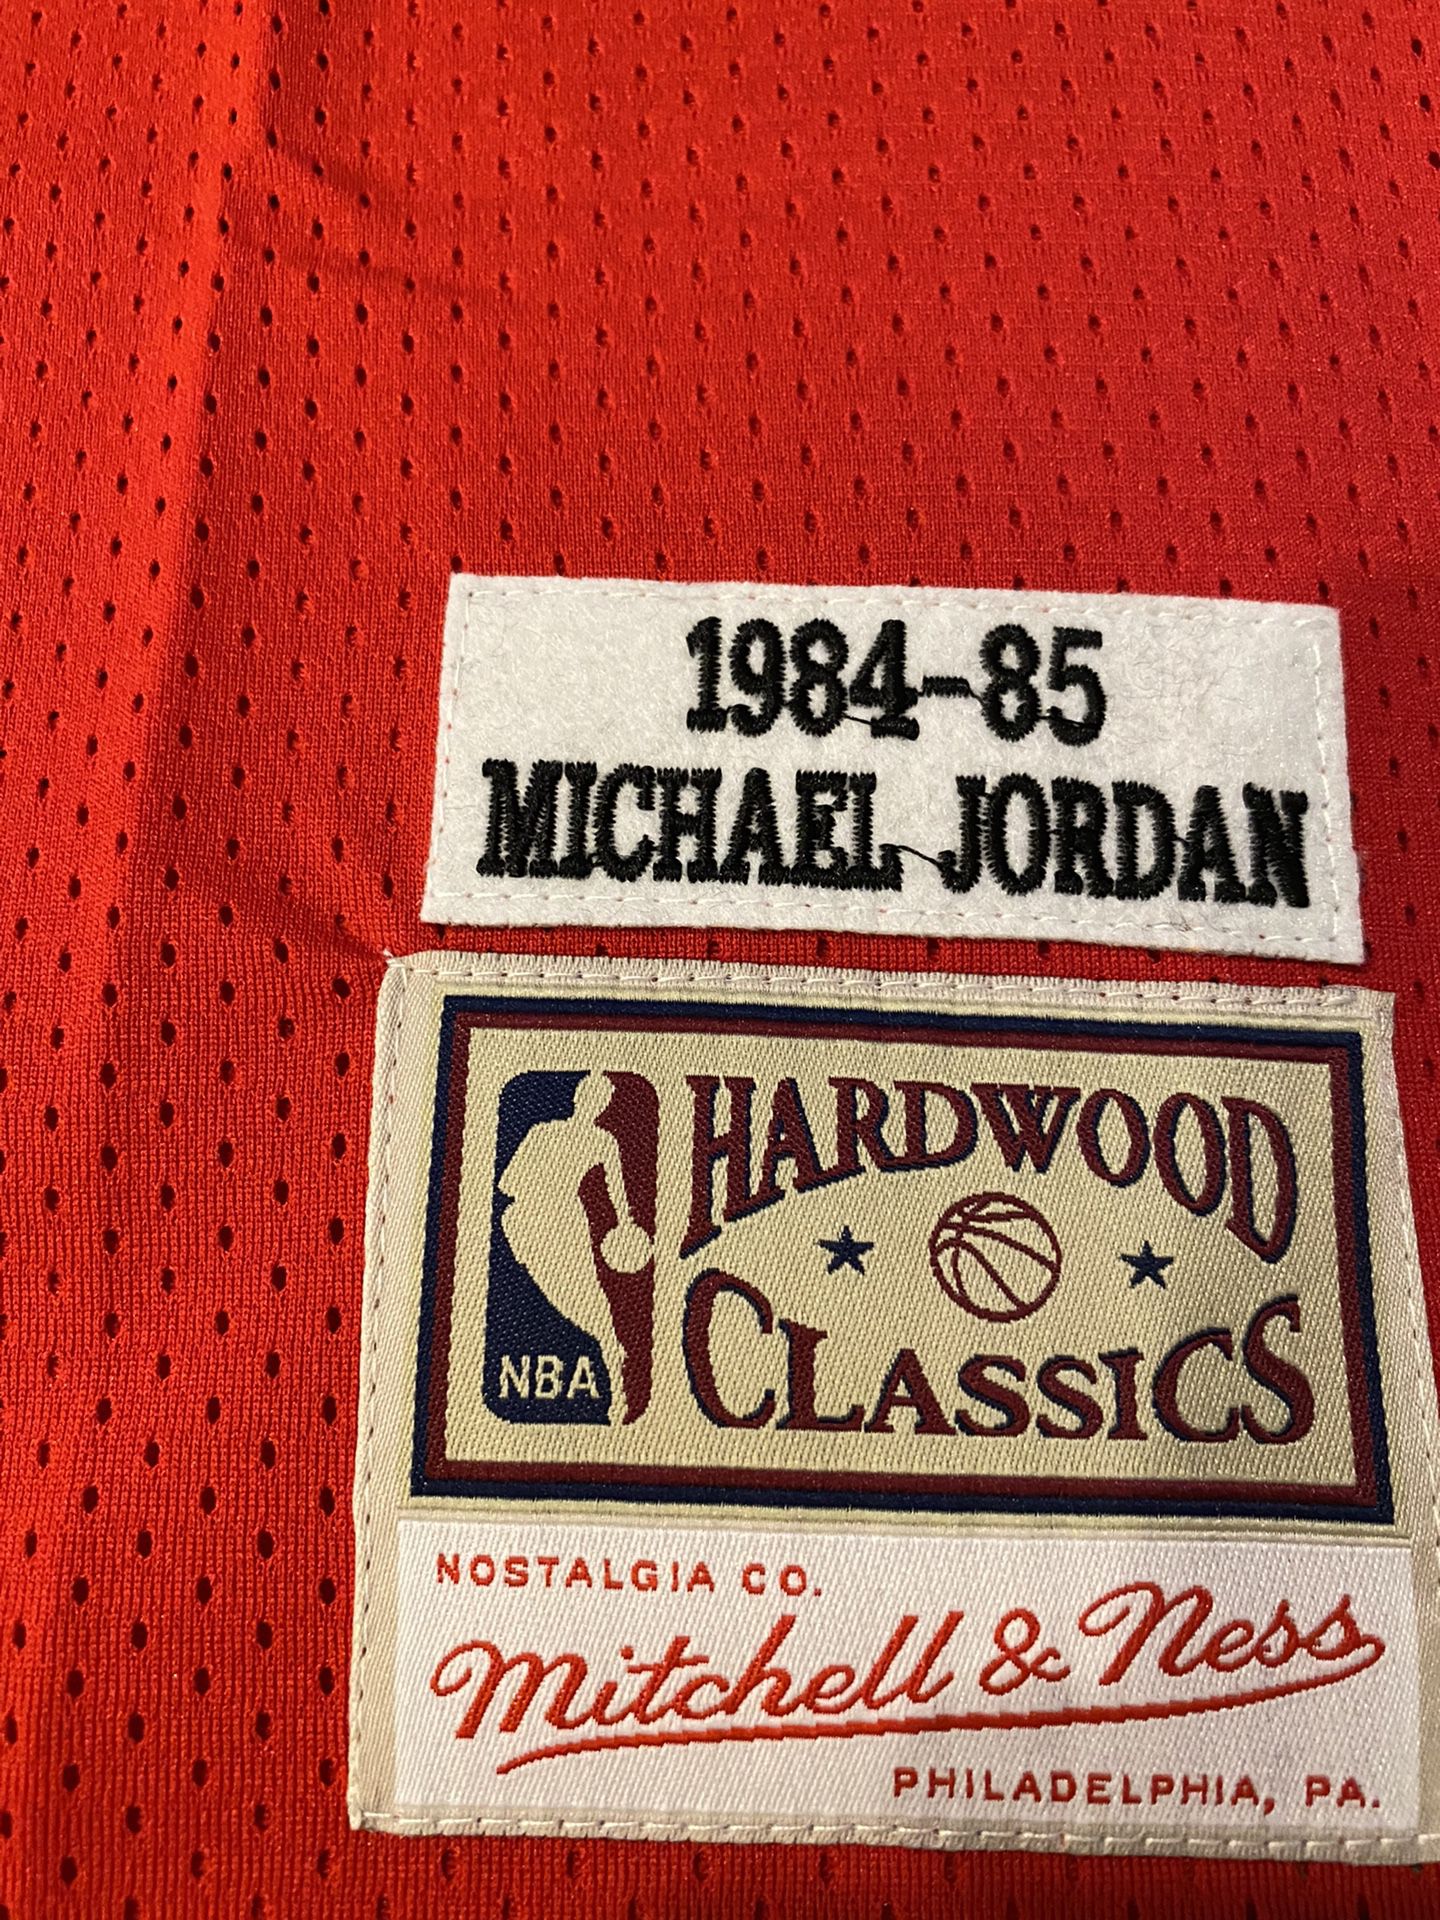 Chicago Bulls #23 Michael Jordan Retro NBA Basketball Jersey - S, M, L, XL,  2X for Sale in Los Angeles, CA - OfferUp